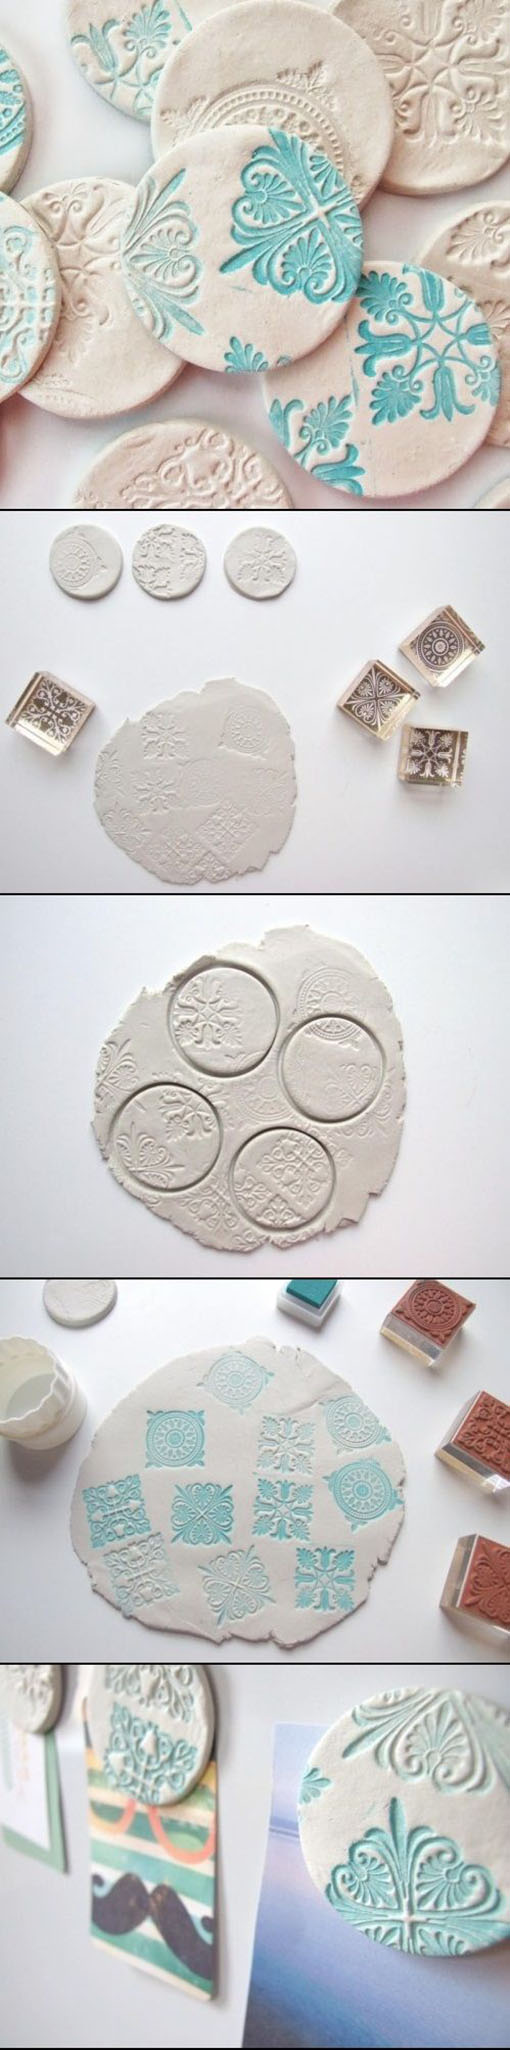 DIY clay magnets11